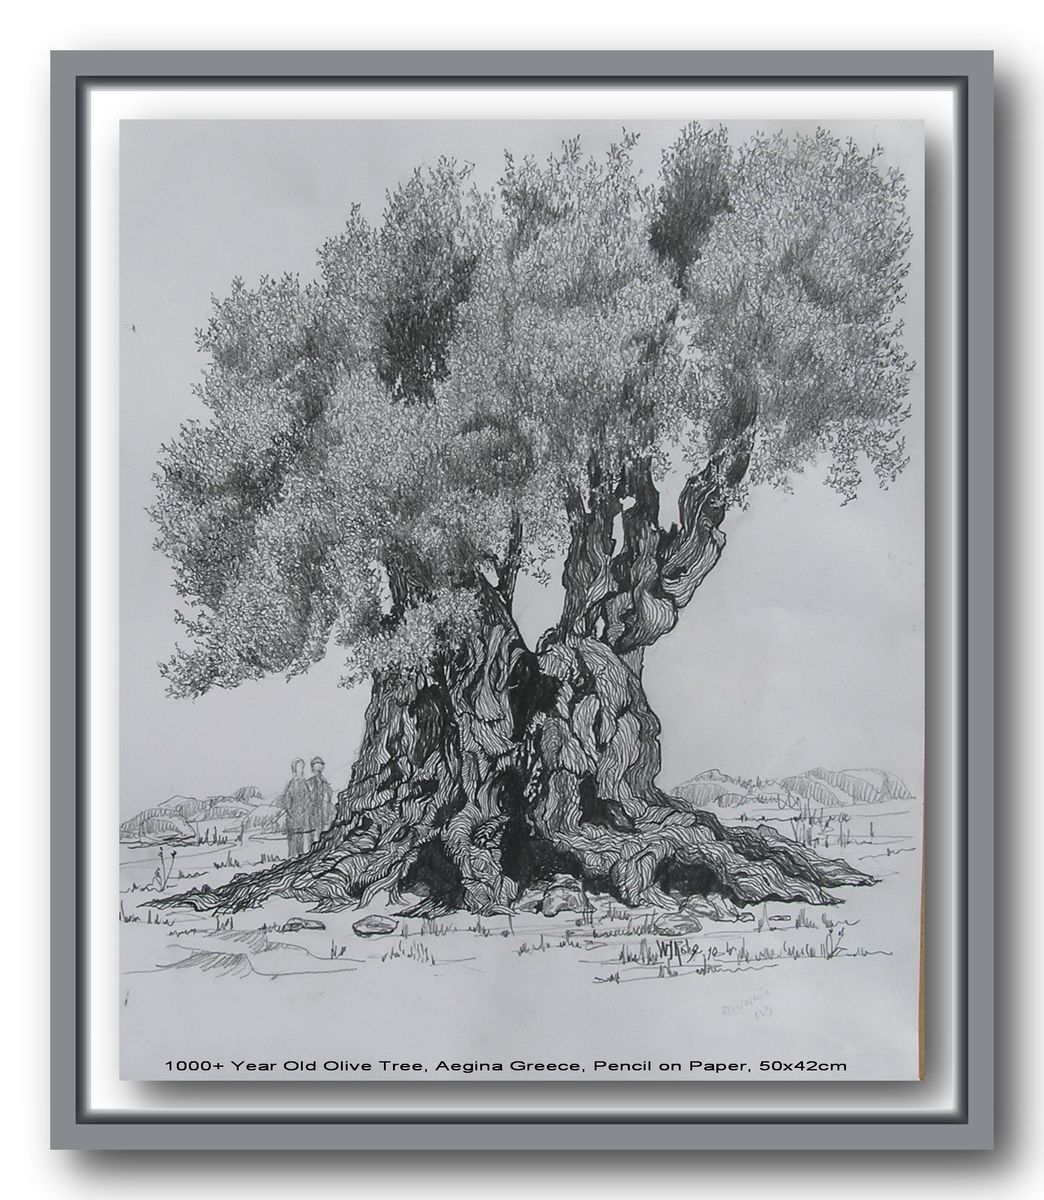 1000+ Year Old Olive Tree, Aegina, Greece